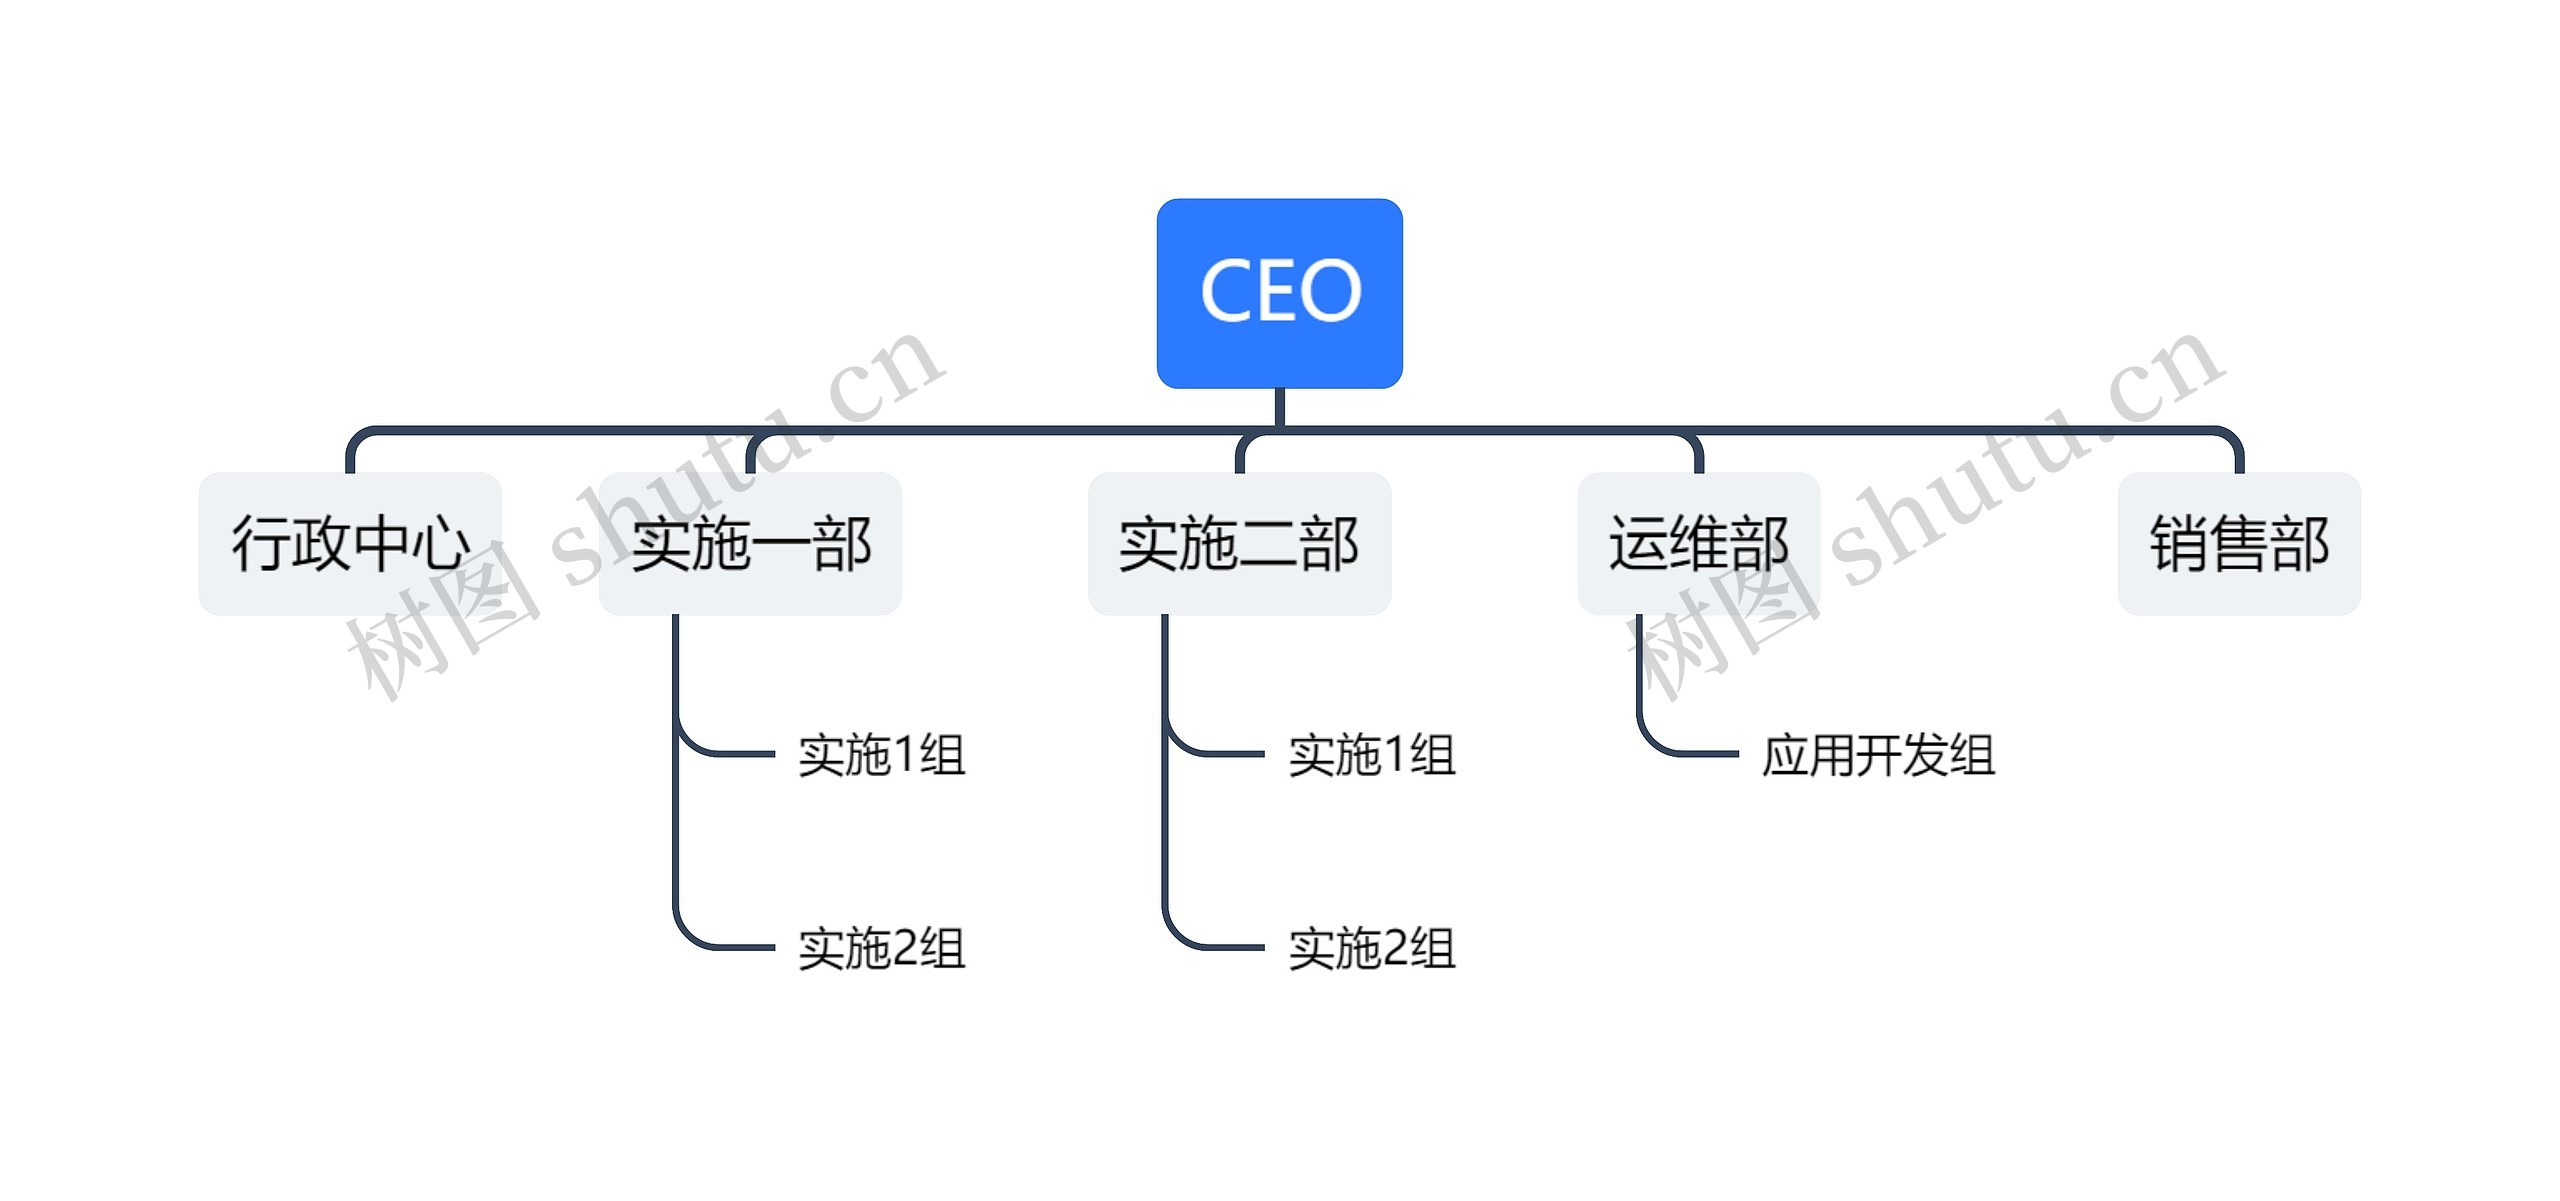 ﻿CEO组织架构图